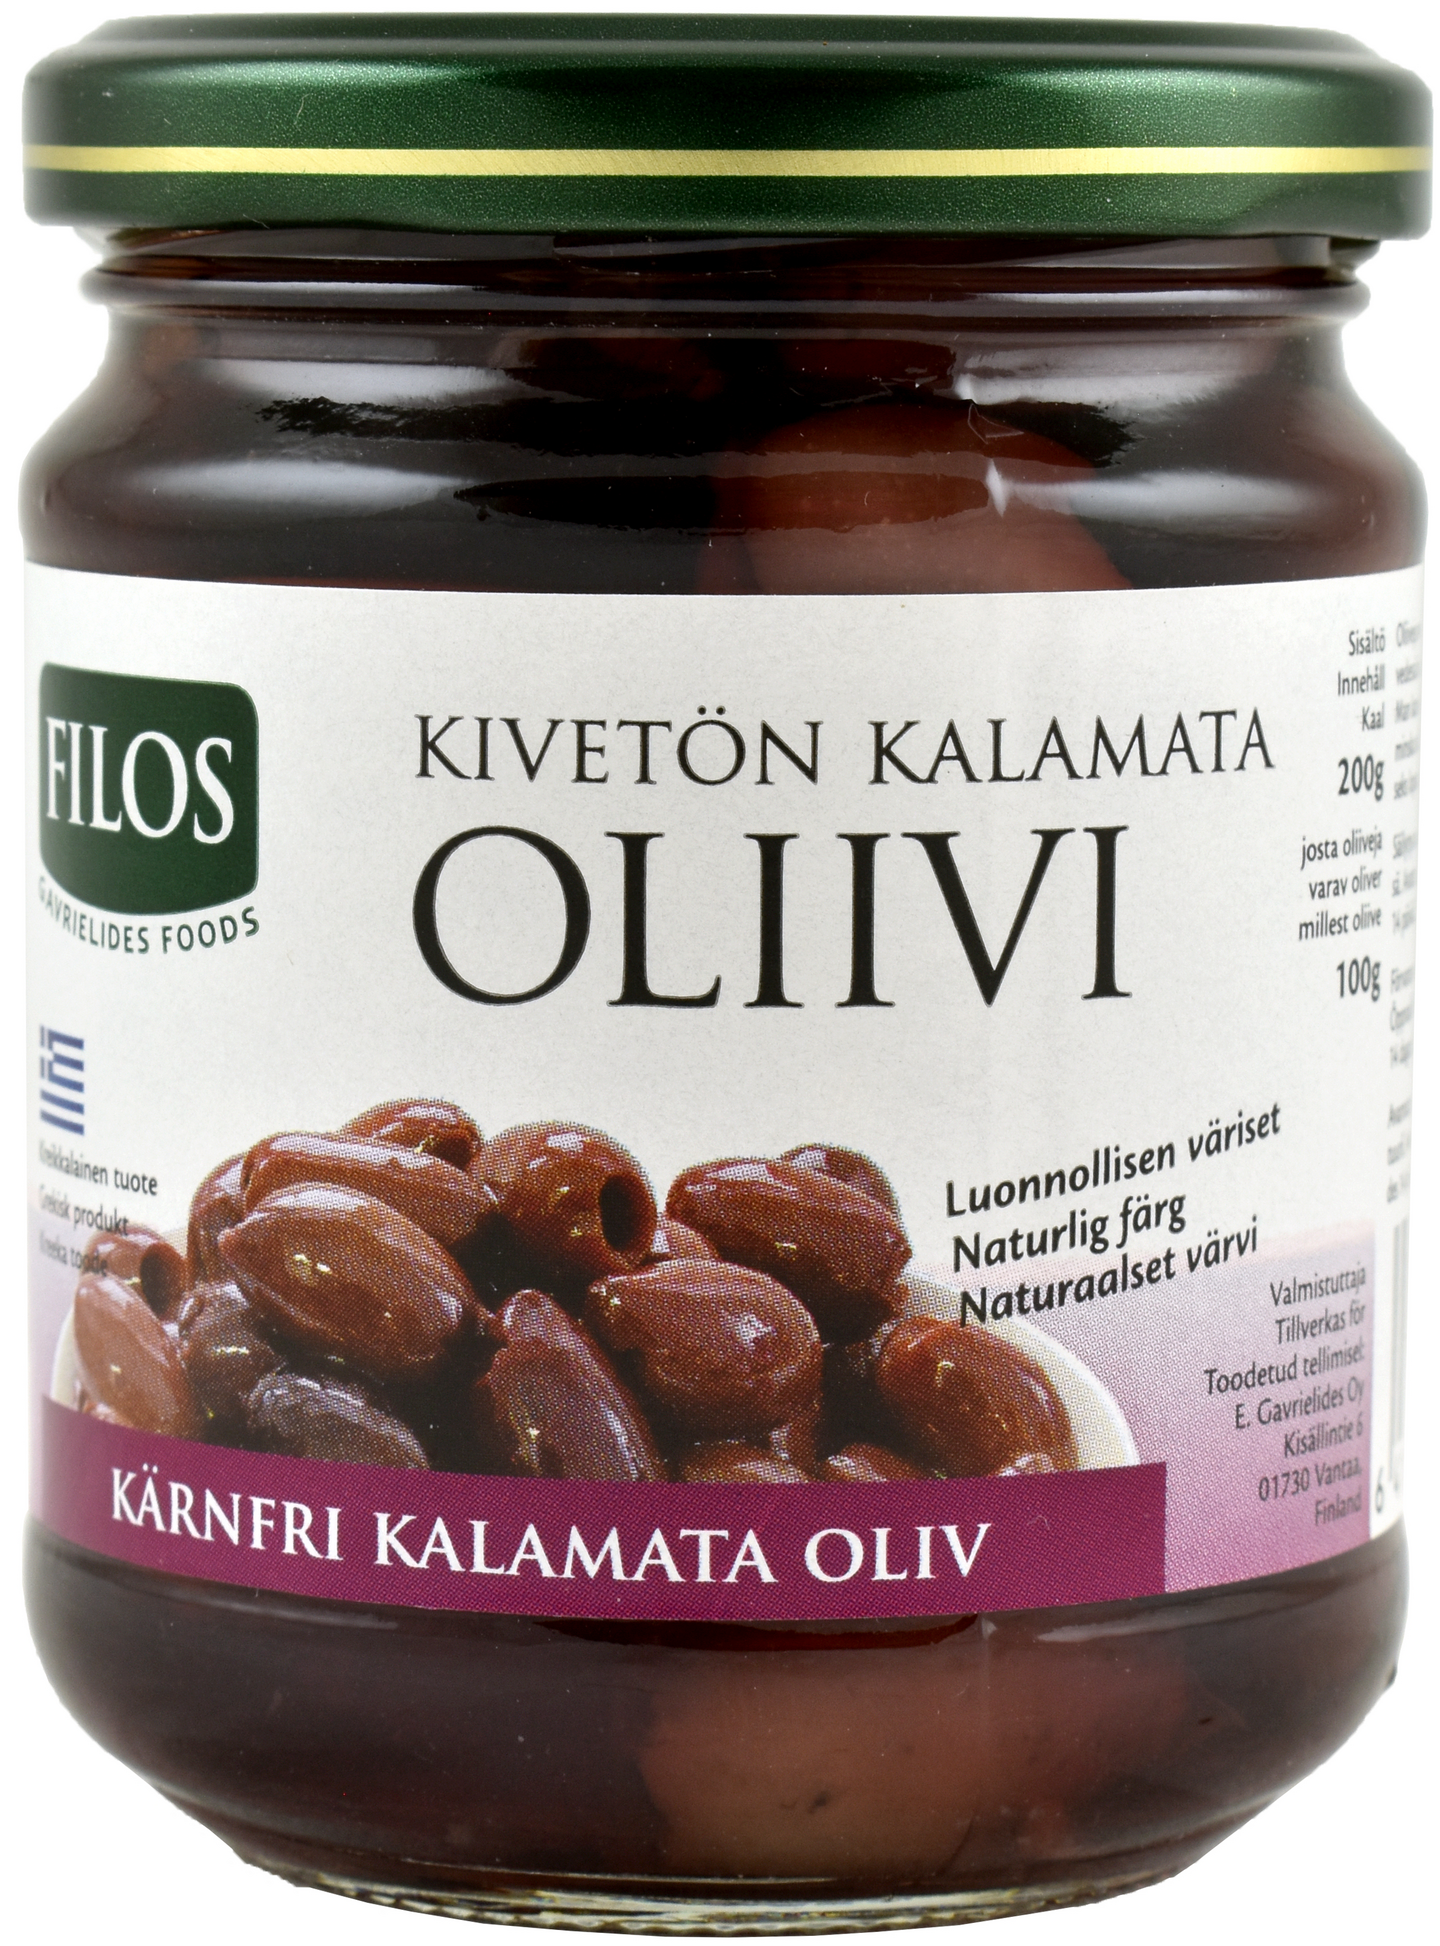 Filos Kivetön Kalamata-oliivi 200g/100g